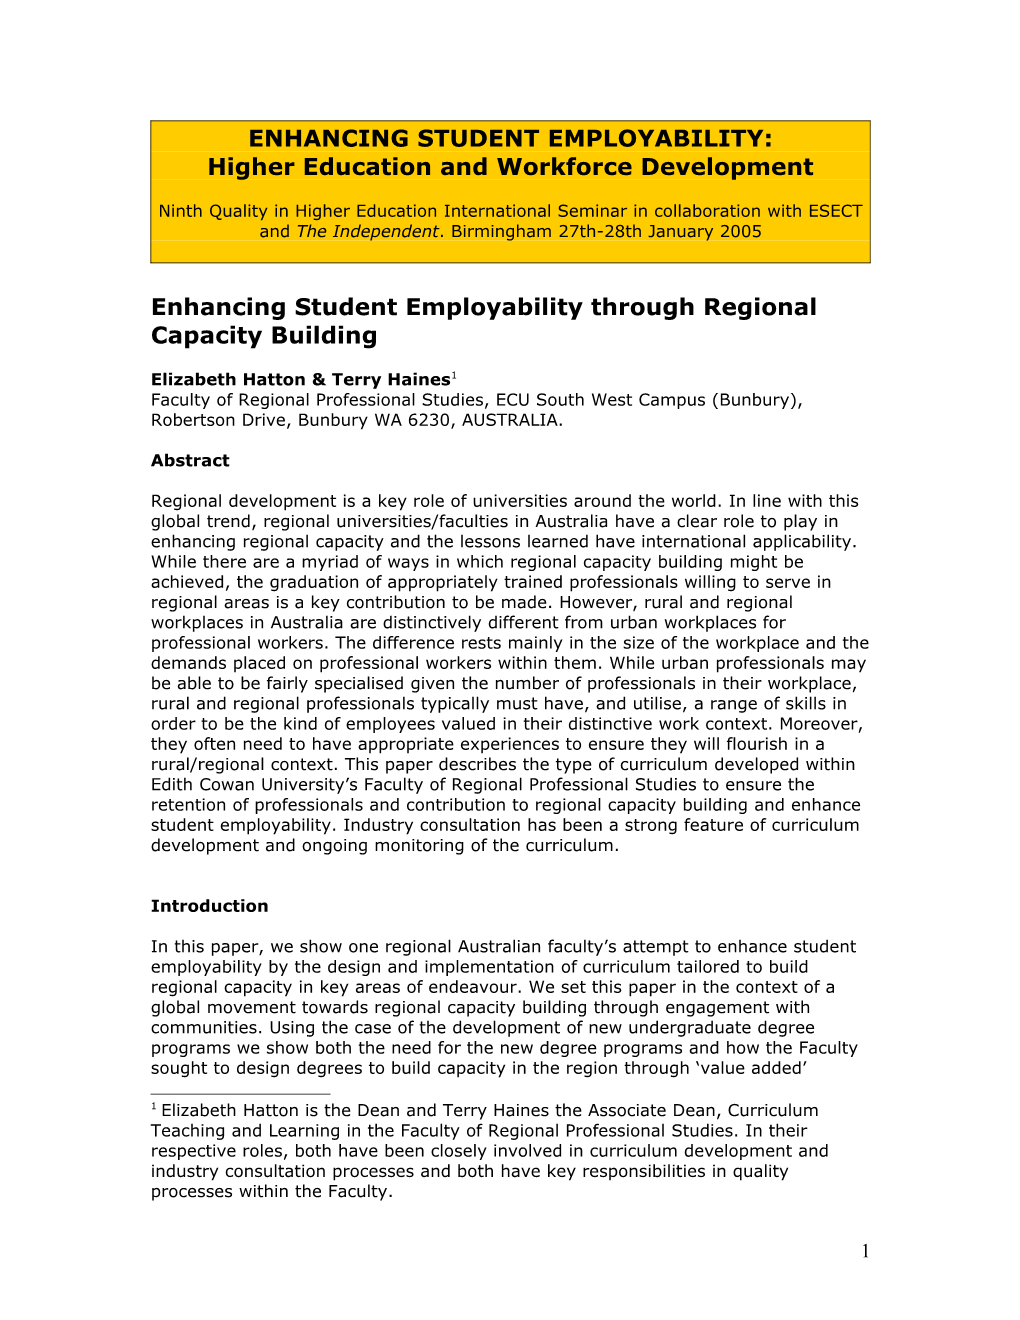 Enhancing Student Employability Through Regional Capacity Building